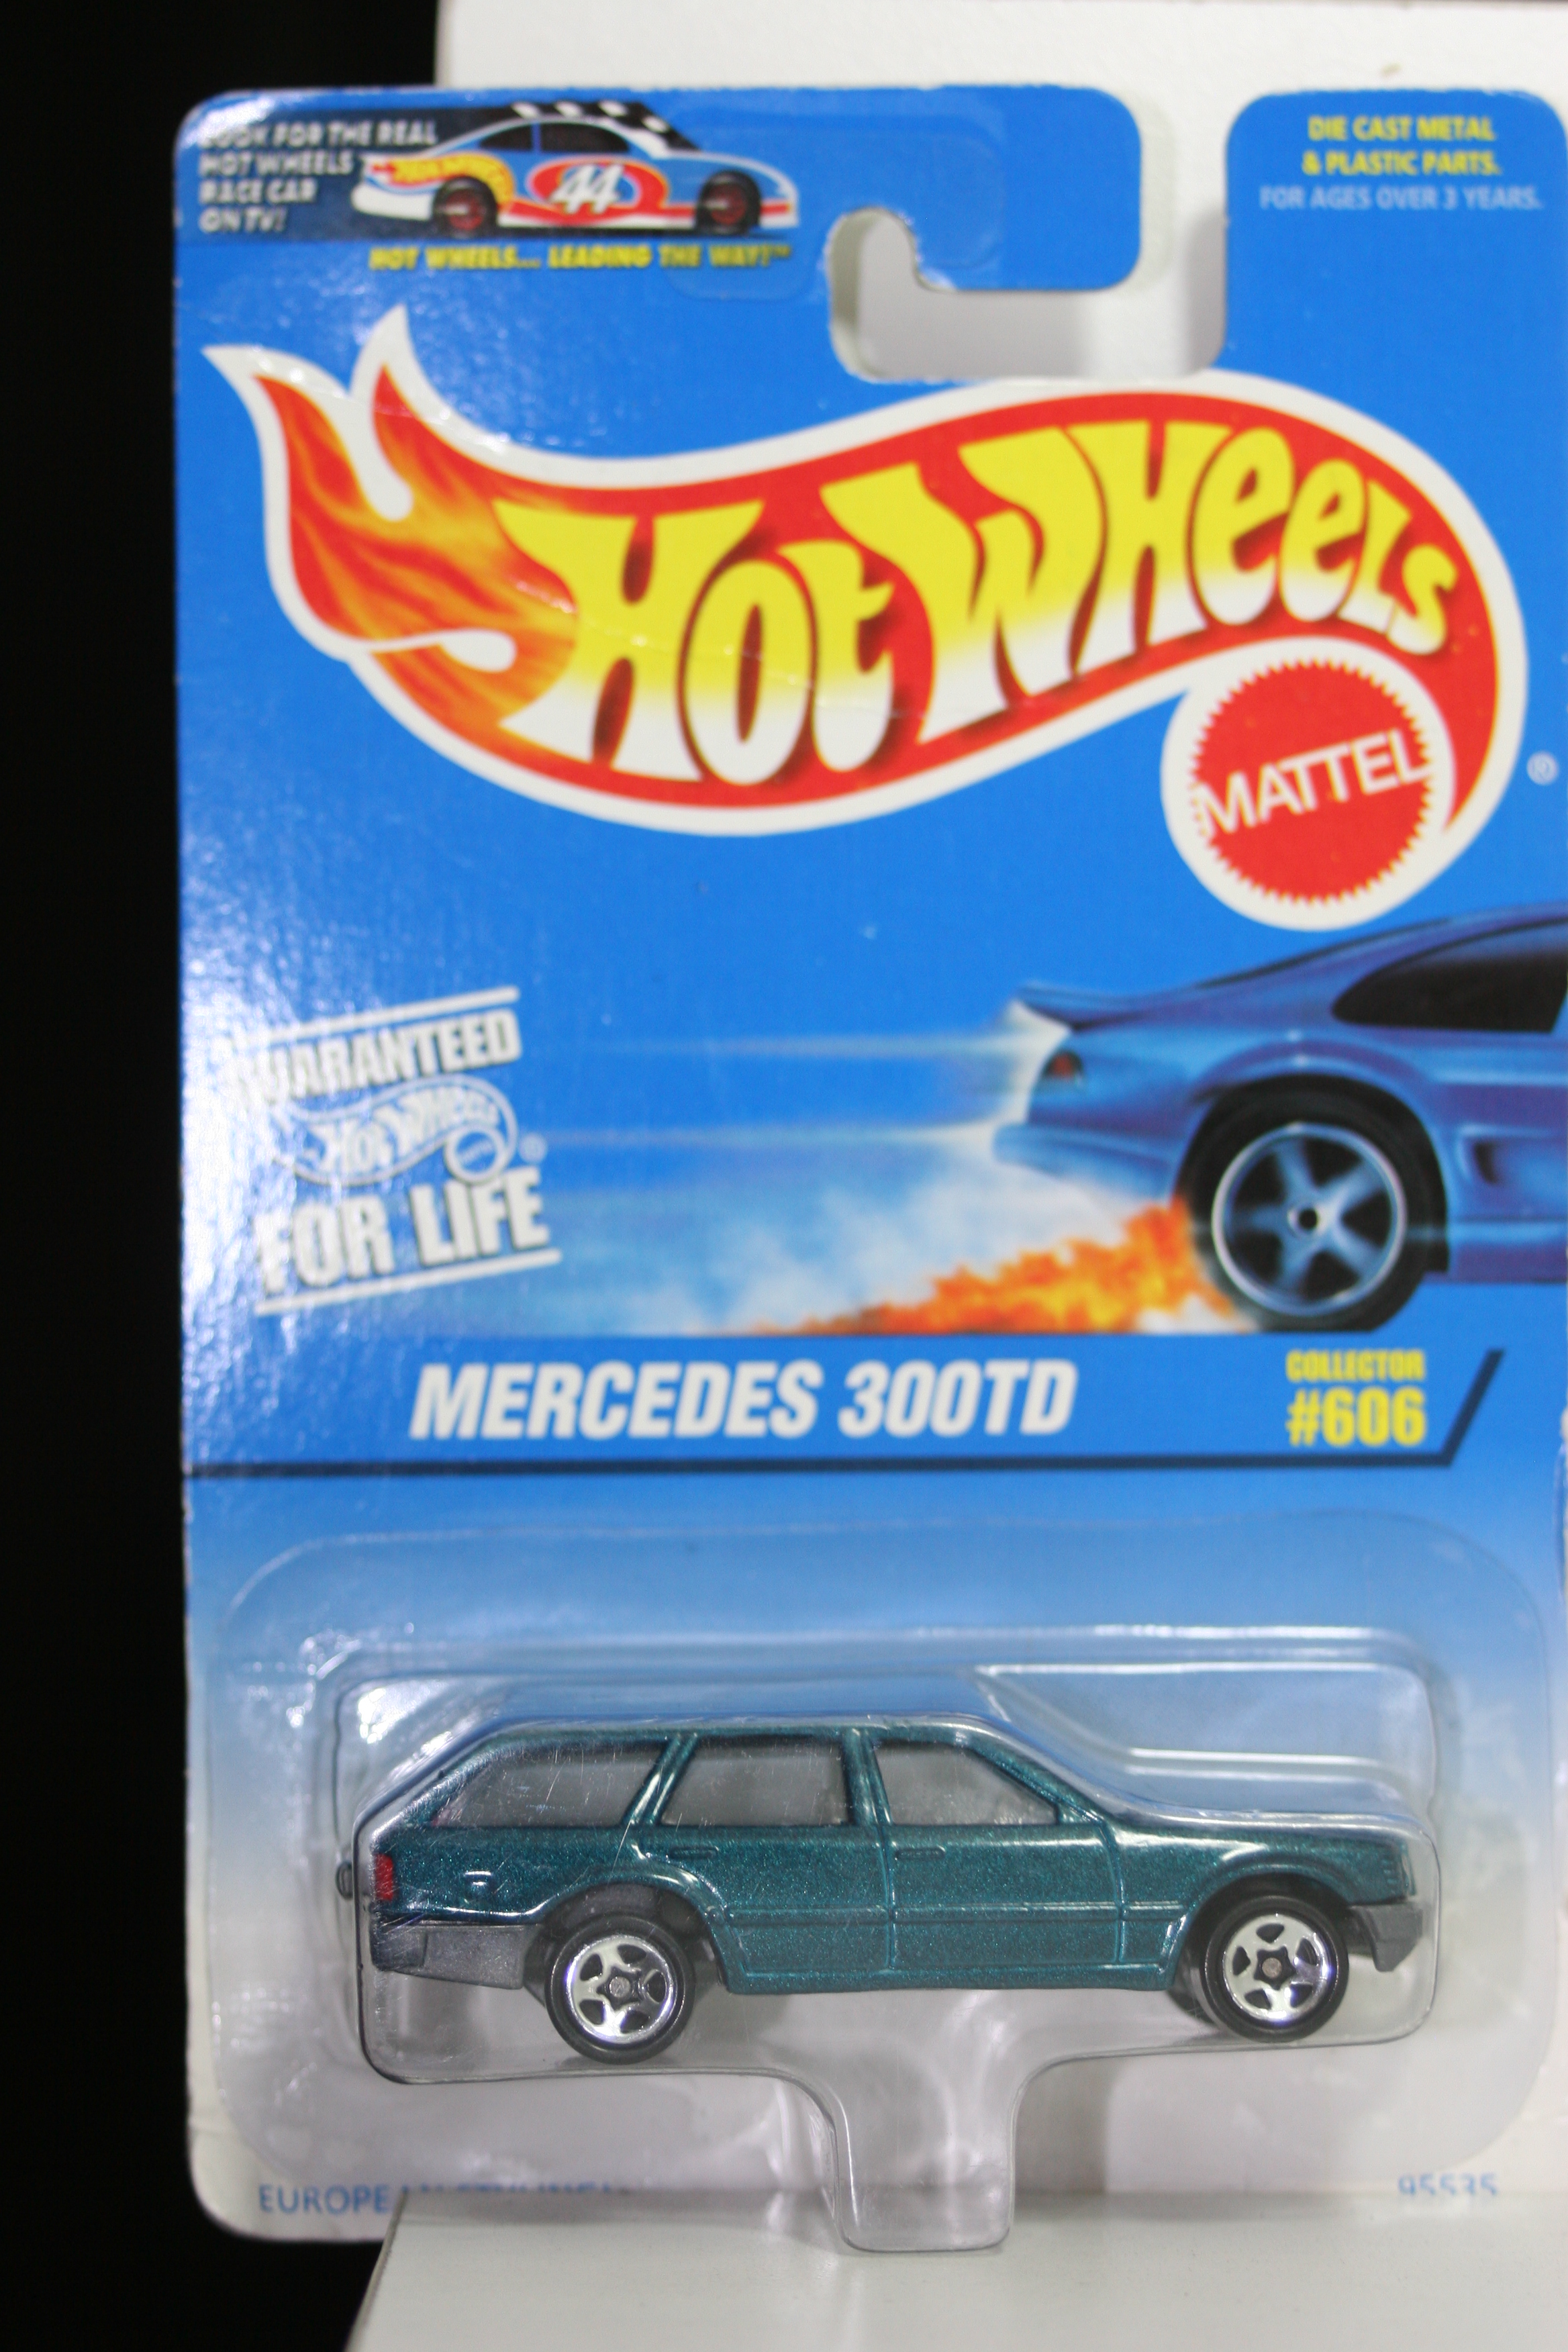 MERCEDES 300TD Hot Wheels 1997 Mattel diecast 1/64 scale Collector No 606 